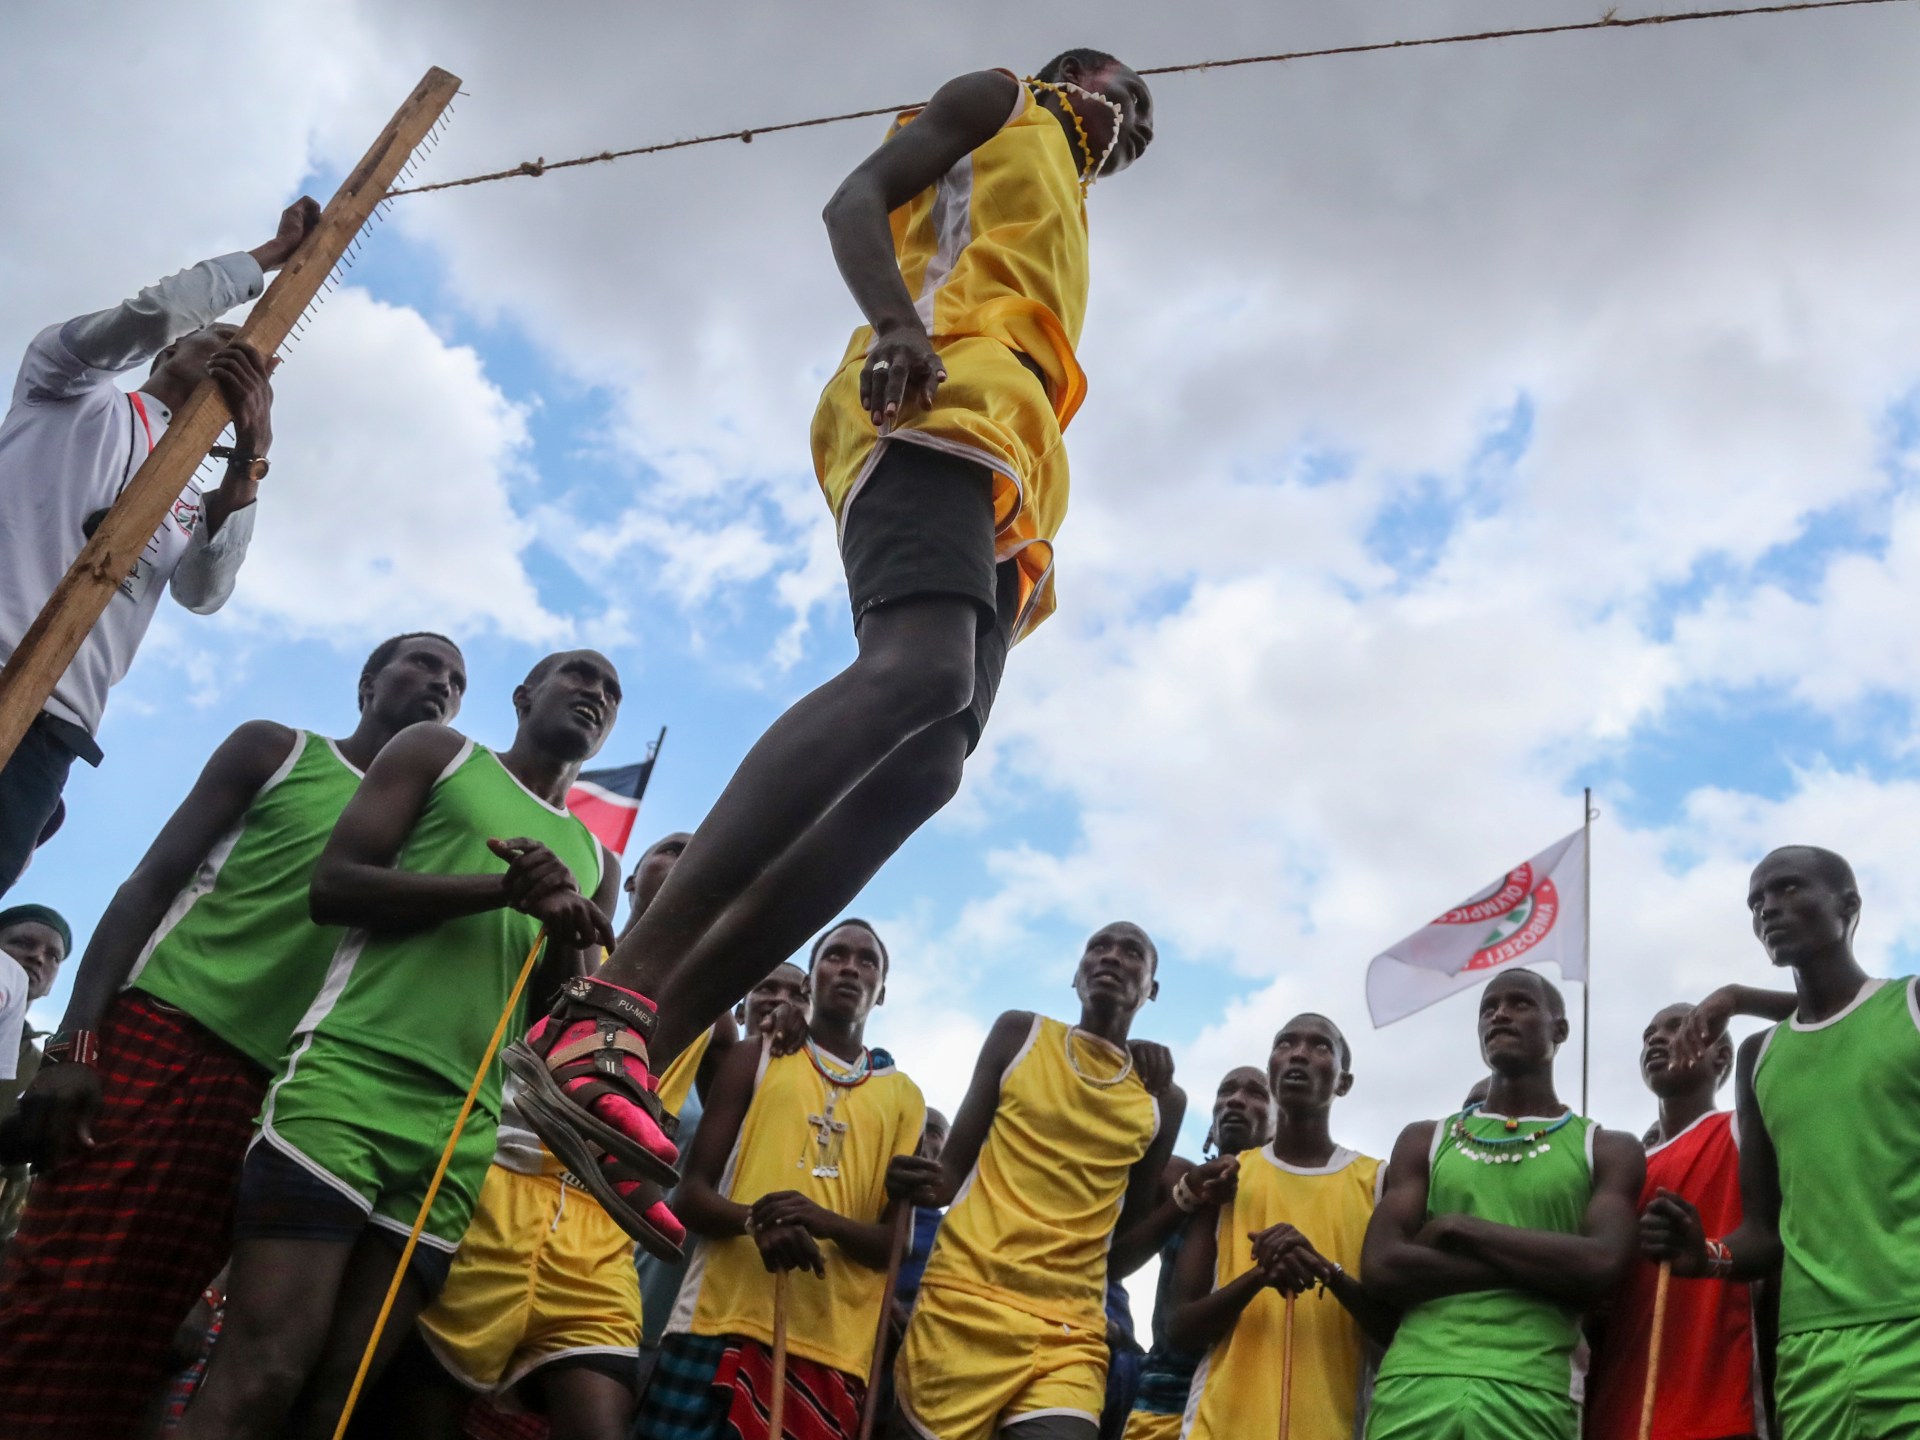 At Kenya’s Maasai Olympics, warriors swap lion hunt for top leap